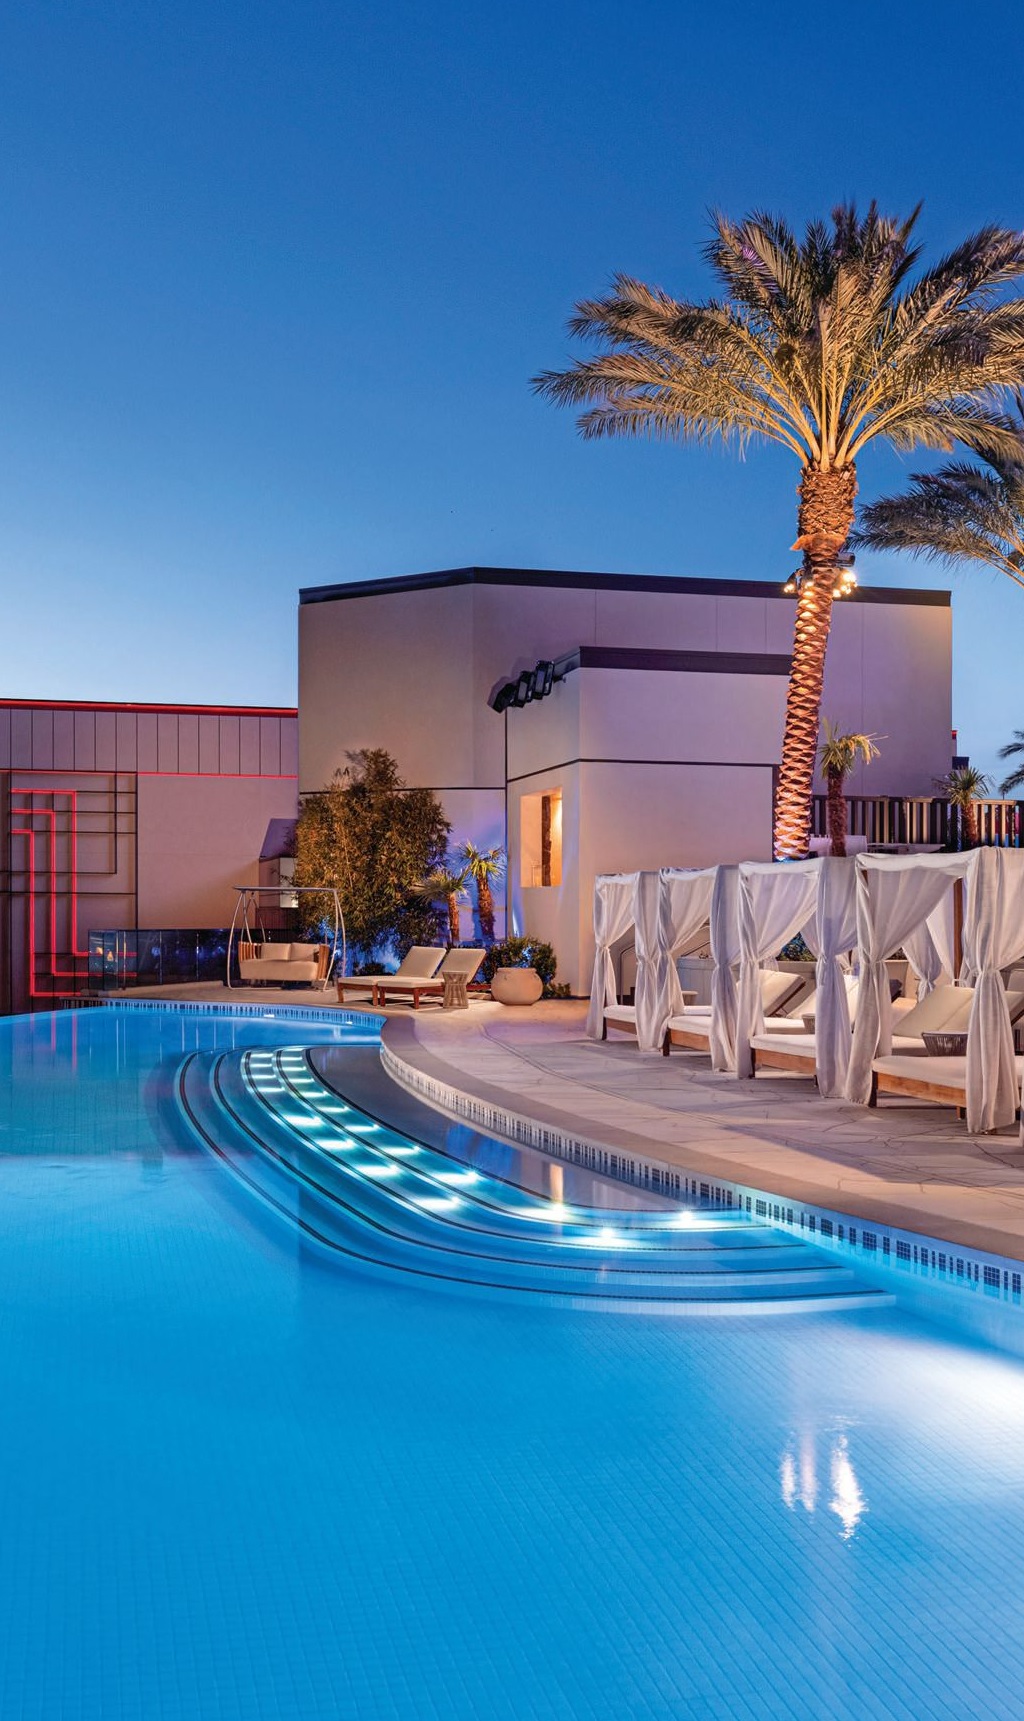 The infinity pool at Resorts World Las Vegas features primo Strip views. PHOTO COURTESY OF RESORTS WORLD LAS VEGAS